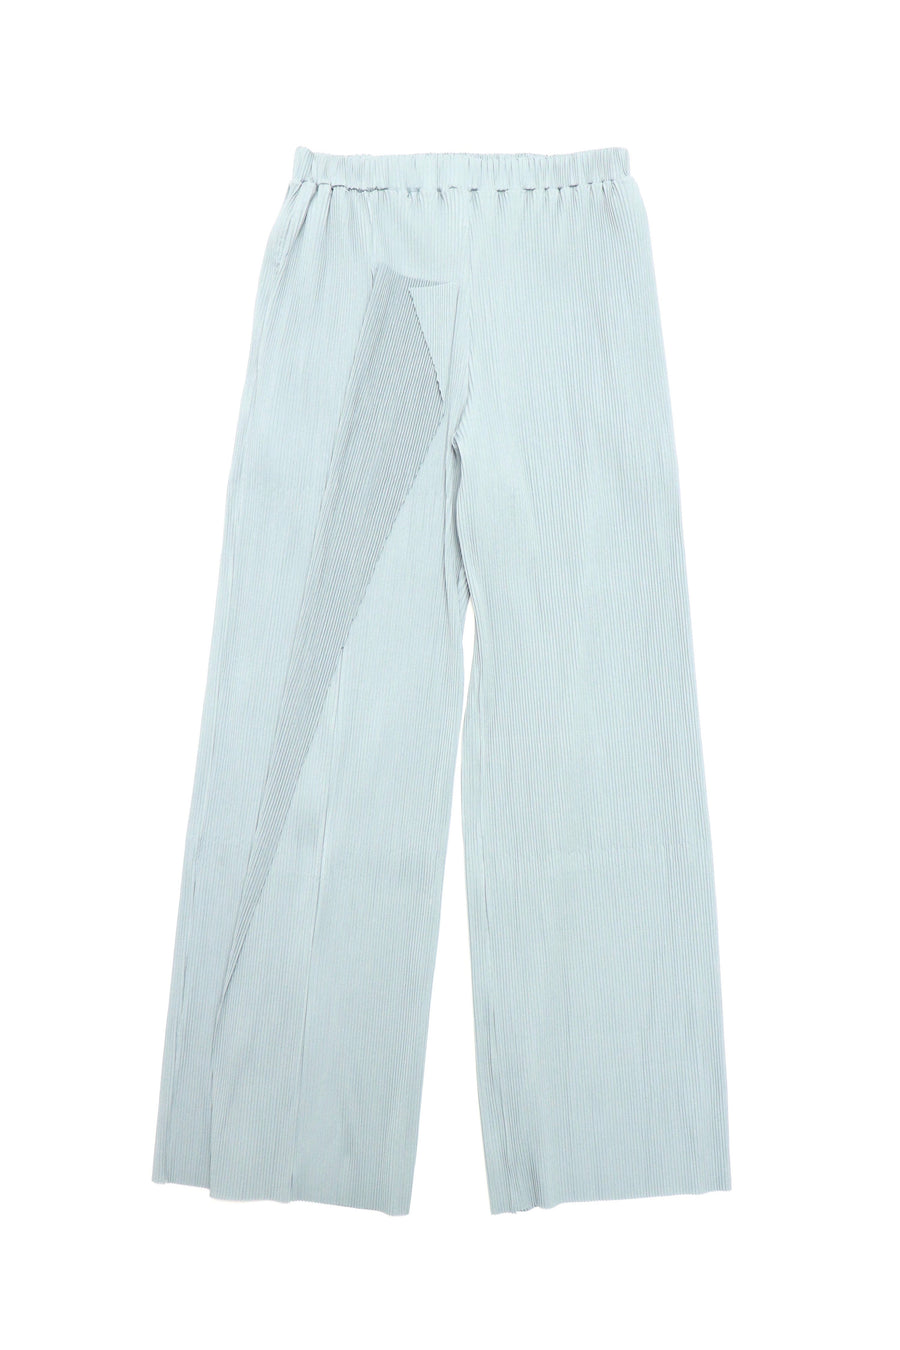 kotohayokozawa  Pleated panel pants(GRAY)